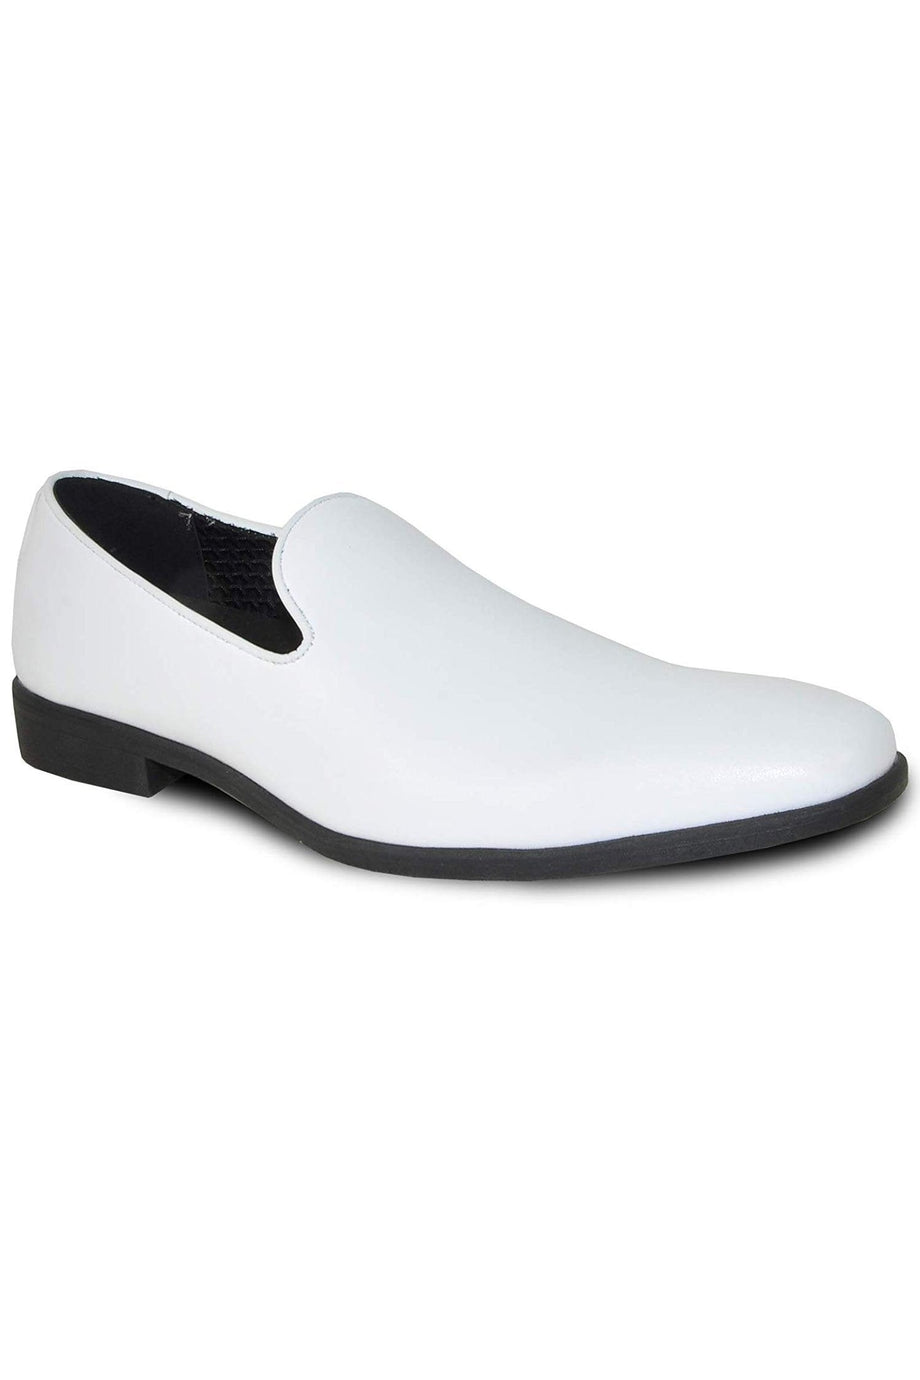 Vangelo "Galileo" White Matte Tuxedo Shoes